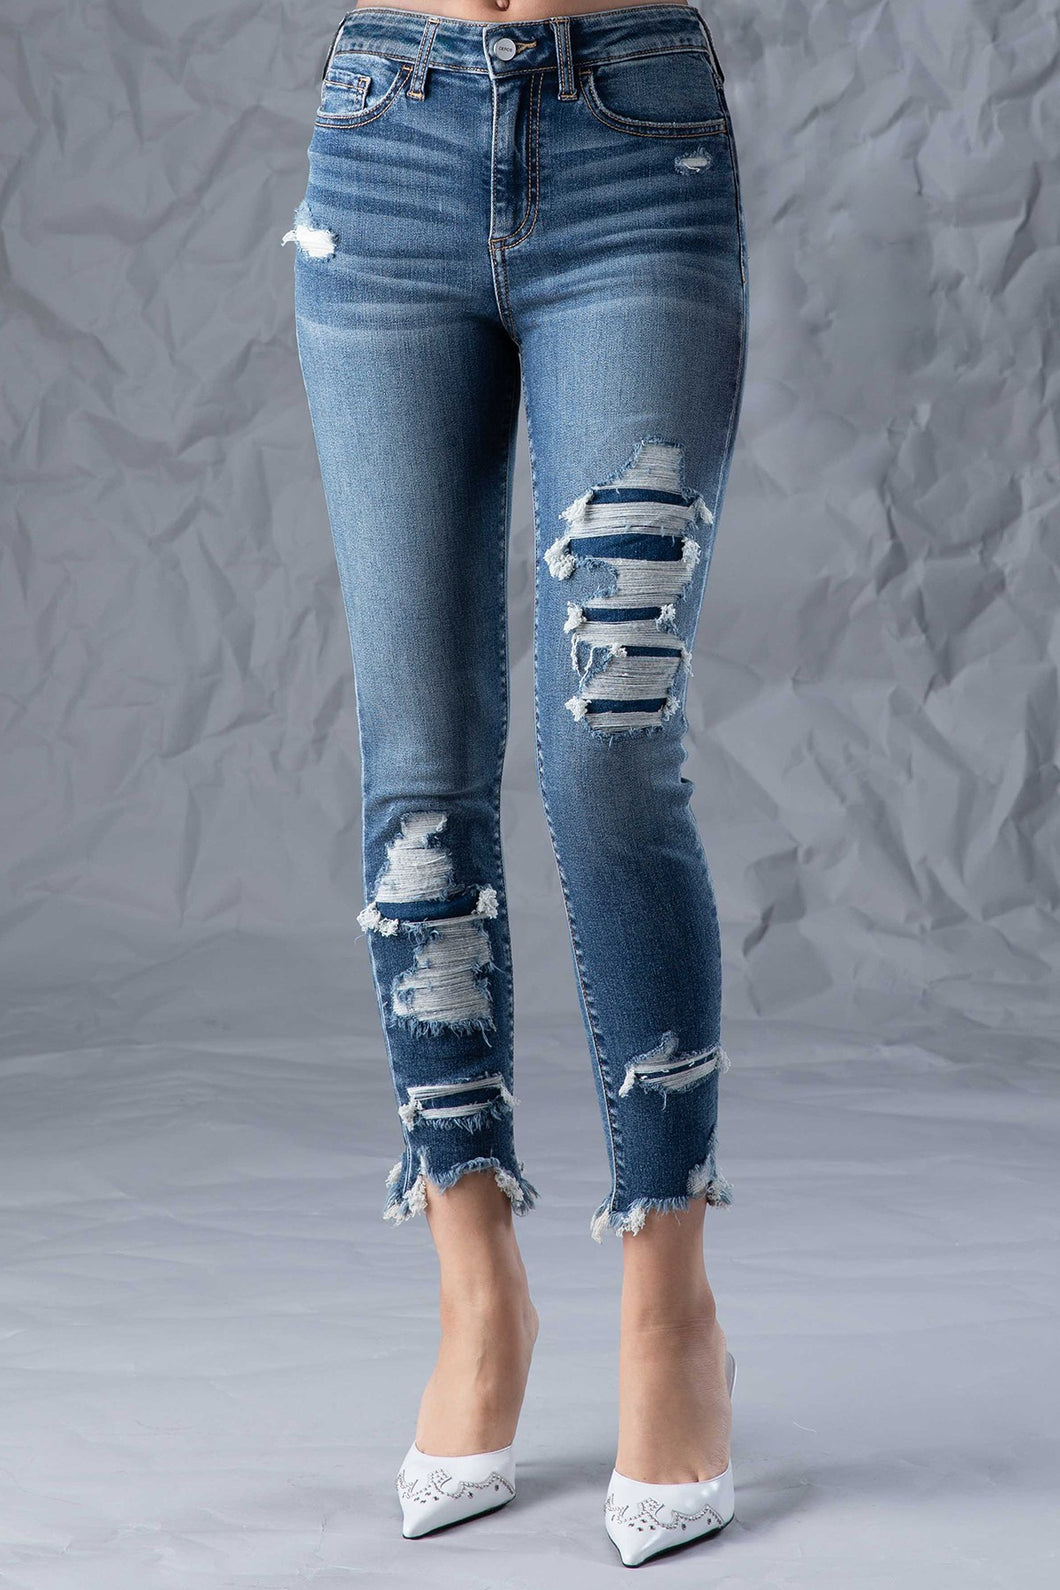 Medium Wash Mid Rise Ankle Skinny Ceros Jeans 12/8/23 7688